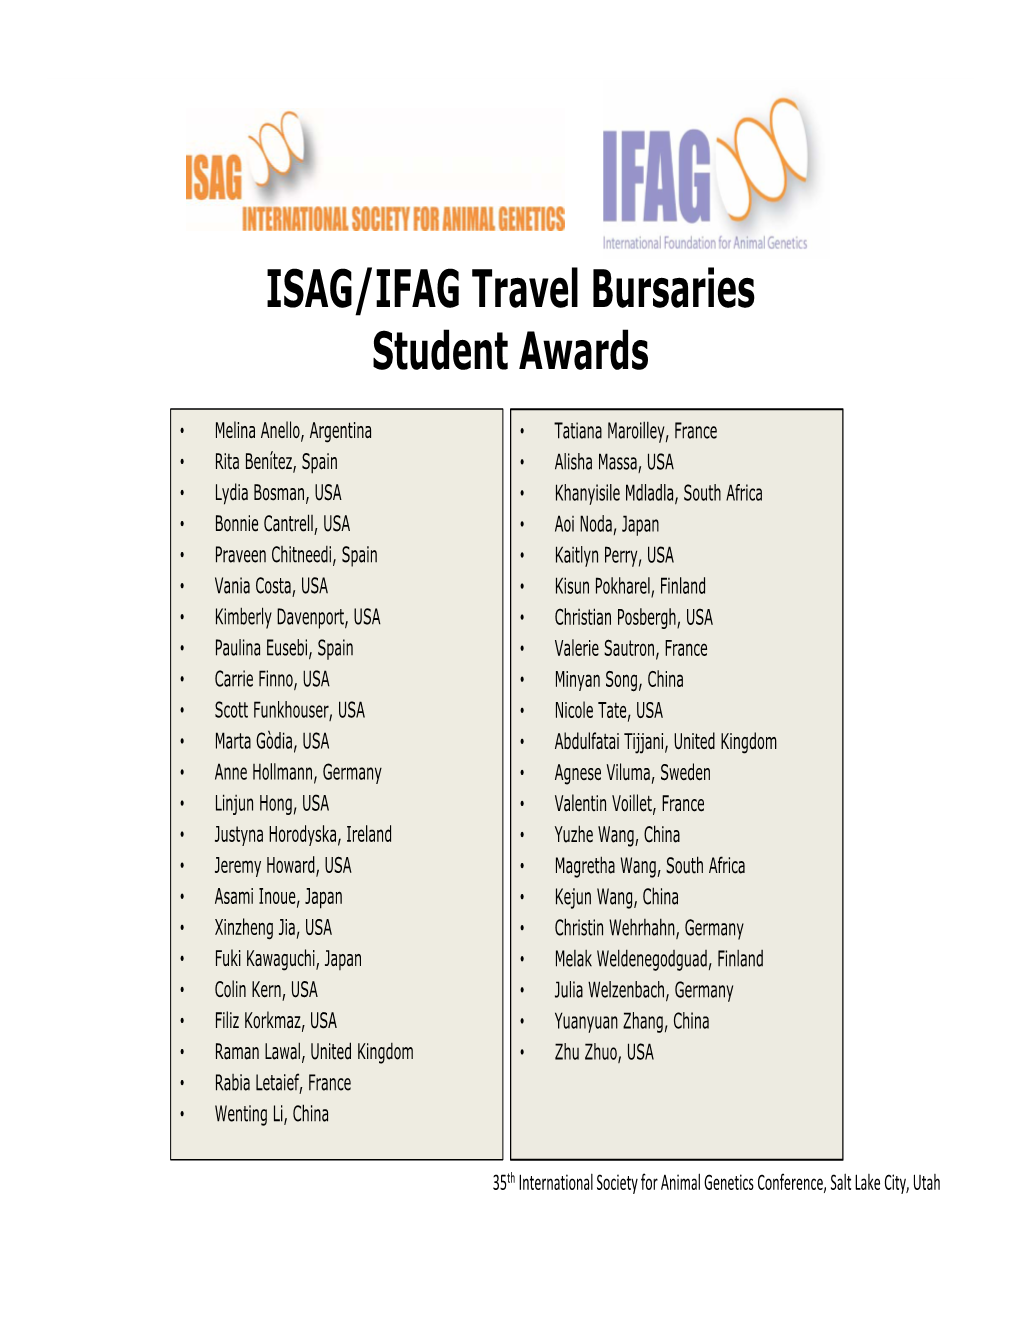 2016 Travel Bursaries and Awards